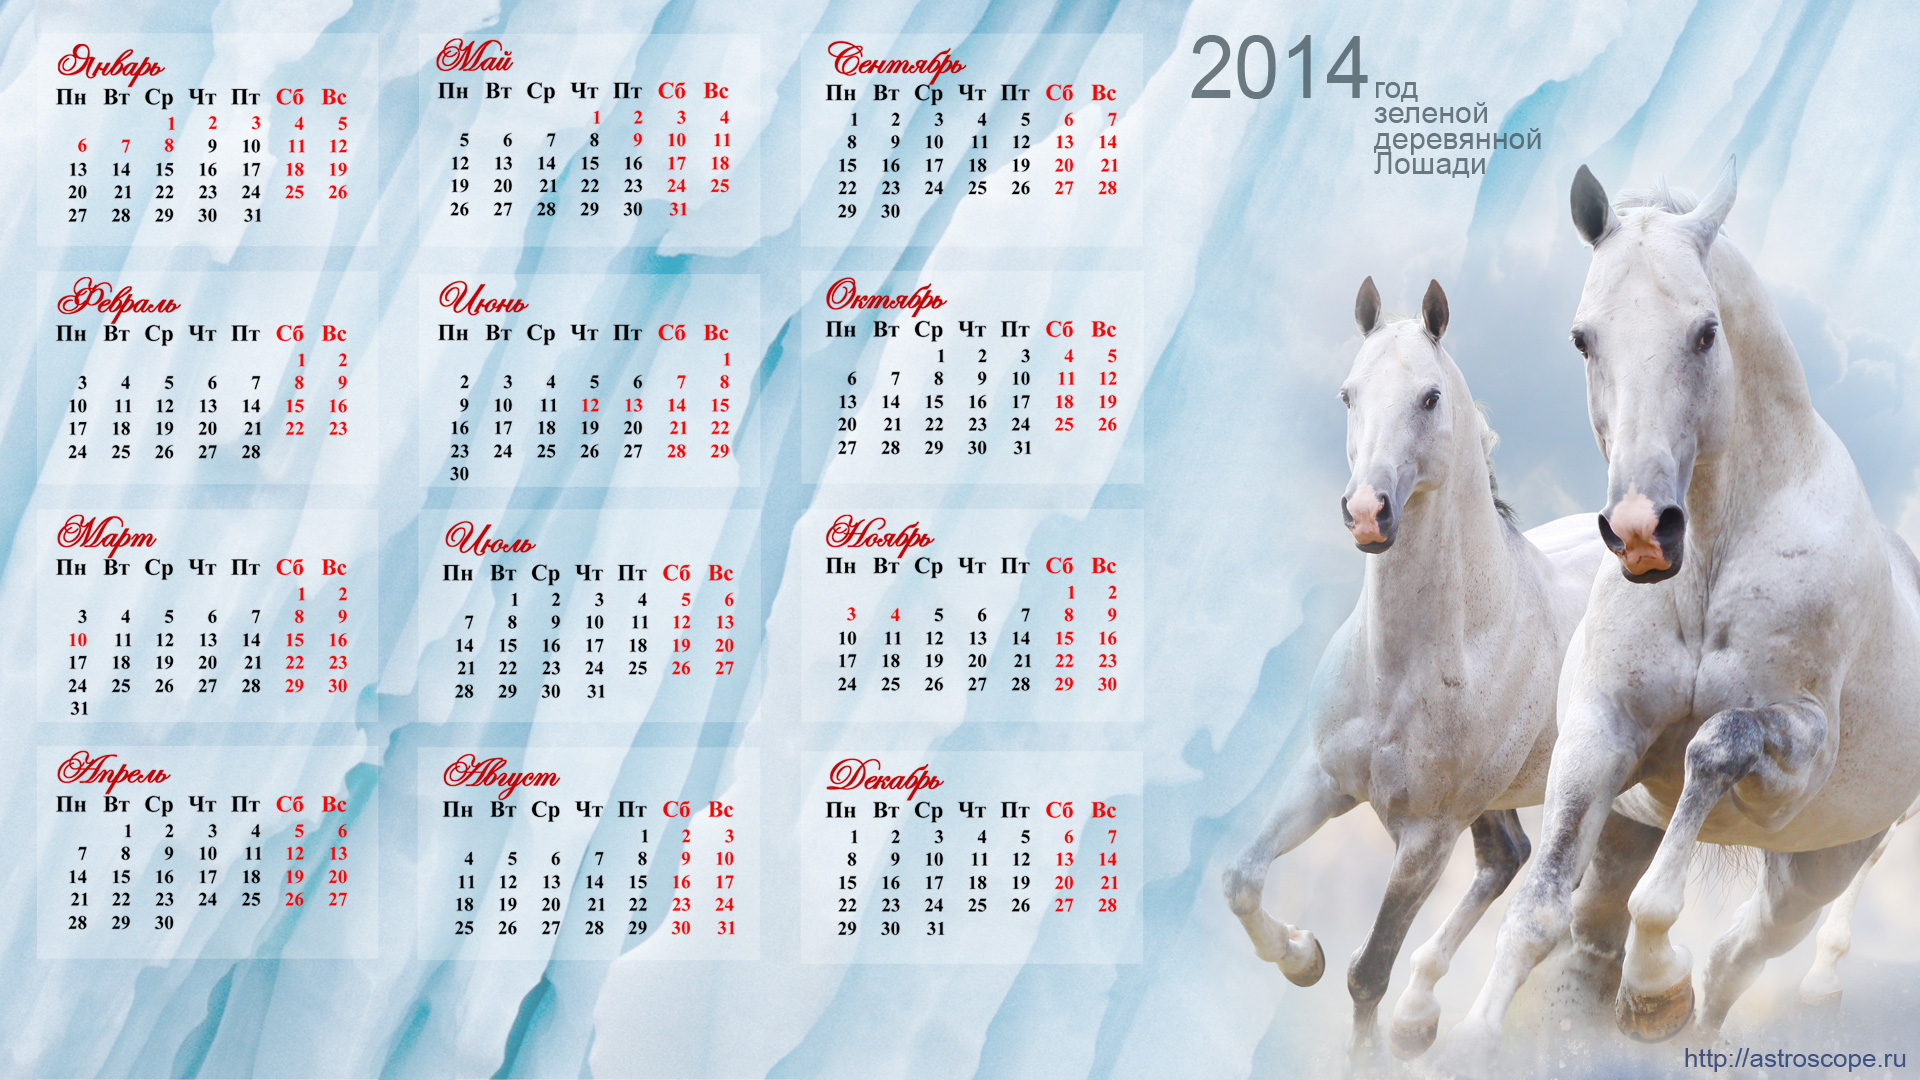 2014 год какого цвета. Календарь 2014 года. 2014 Год. Календарь 2014 год лошади. Календарь лошадь.